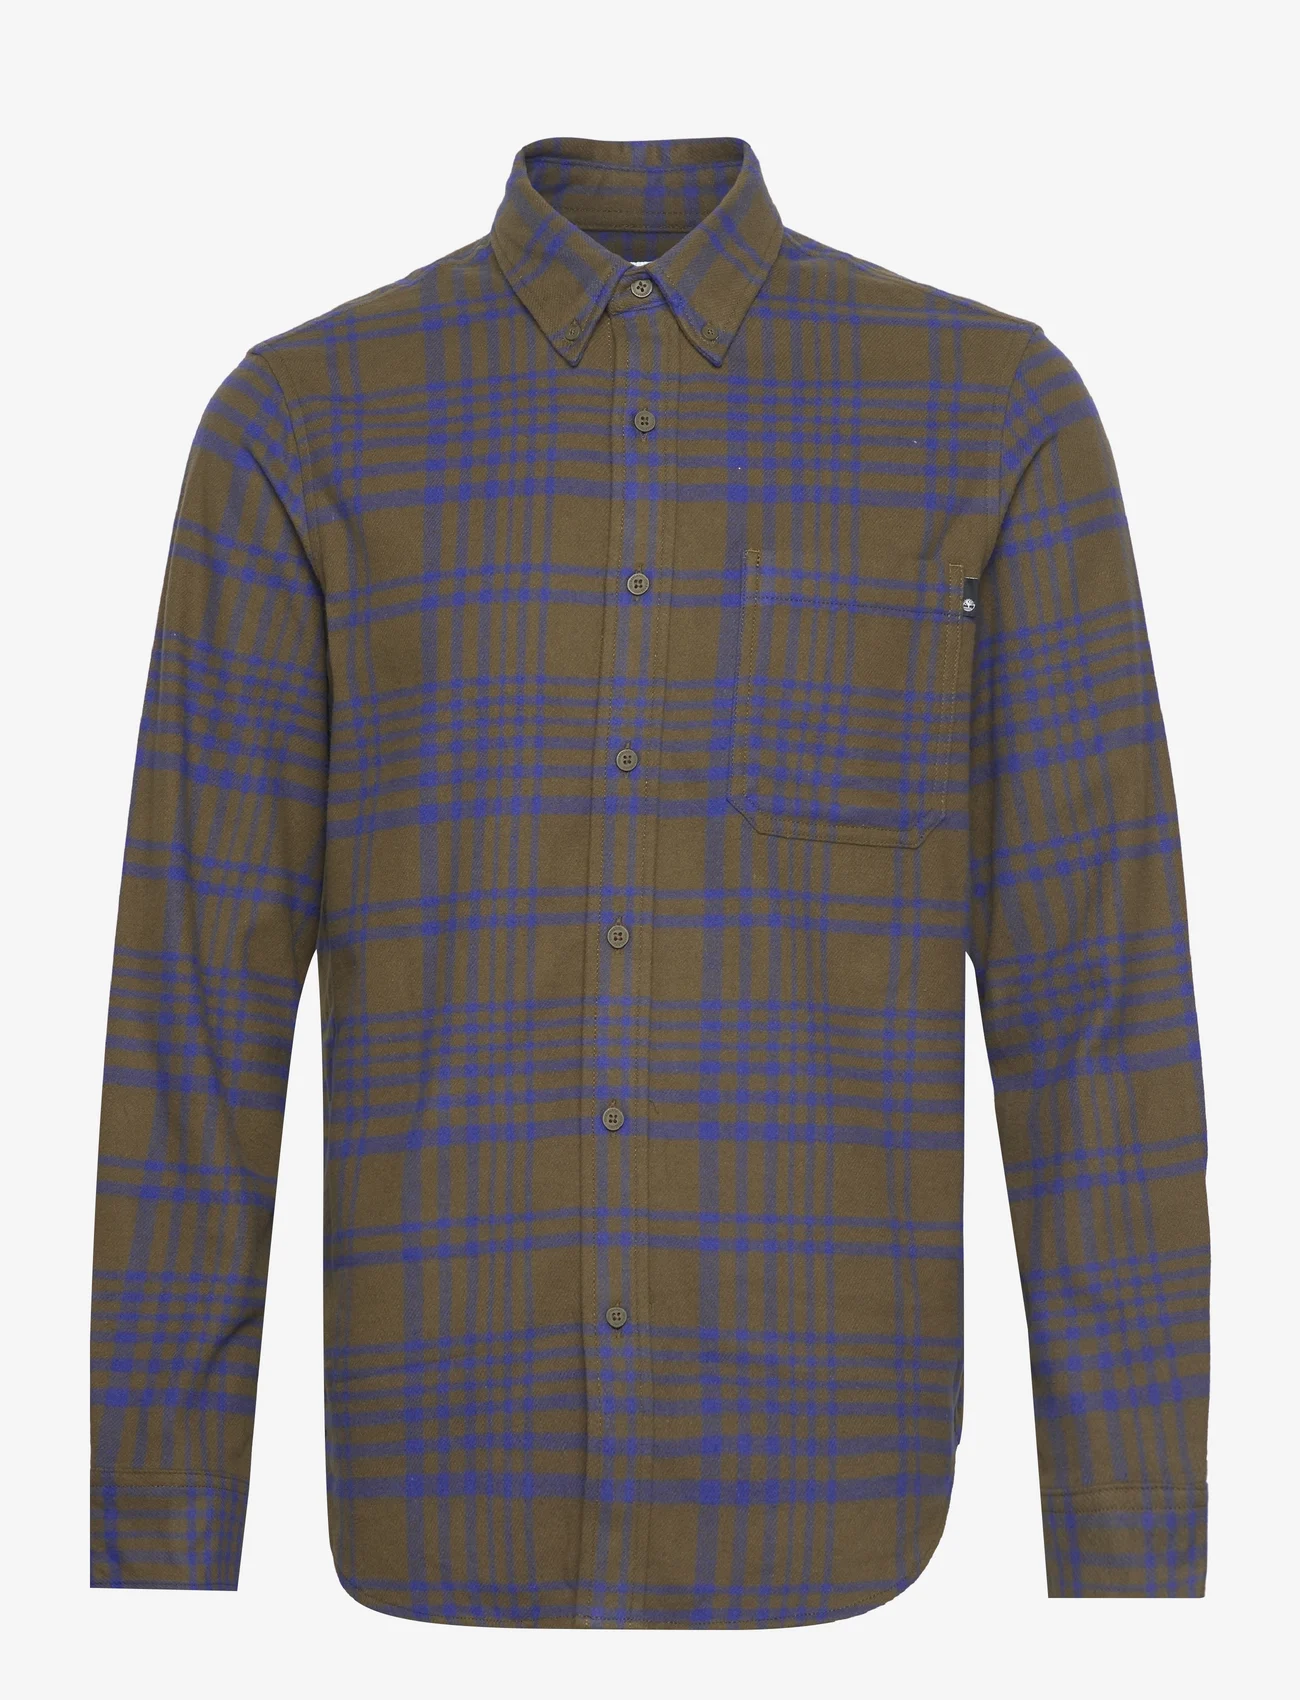 Timberland - LS Heavy Flannel Check - basic overhemden - dark olive yd - 0